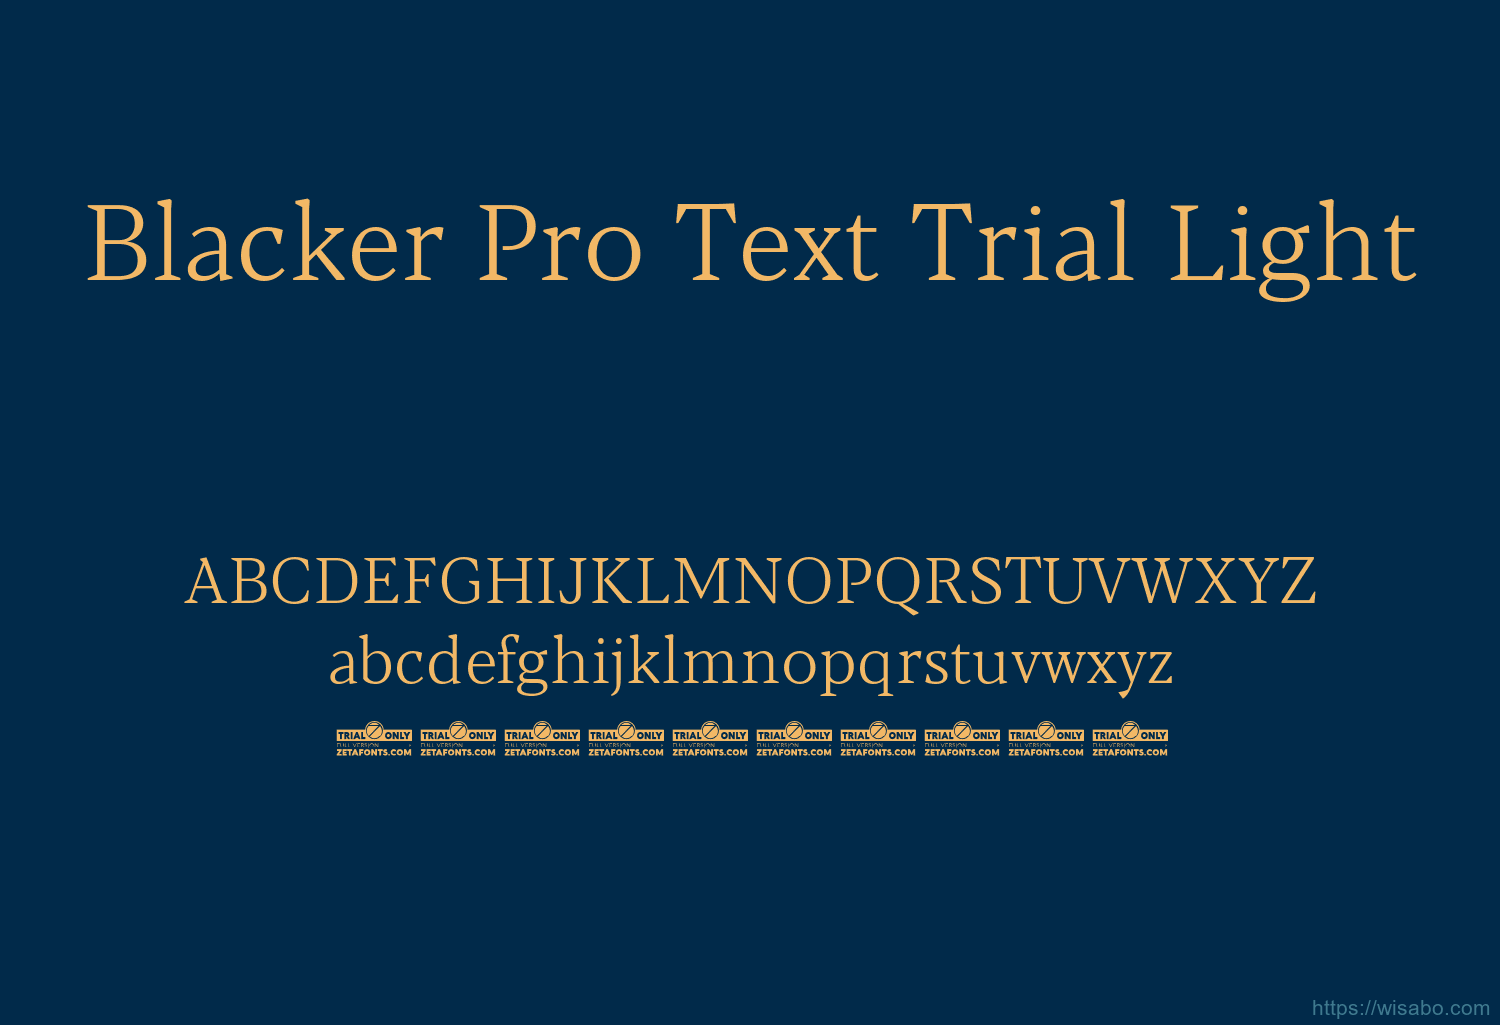 Blacker Pro Text Trial Light